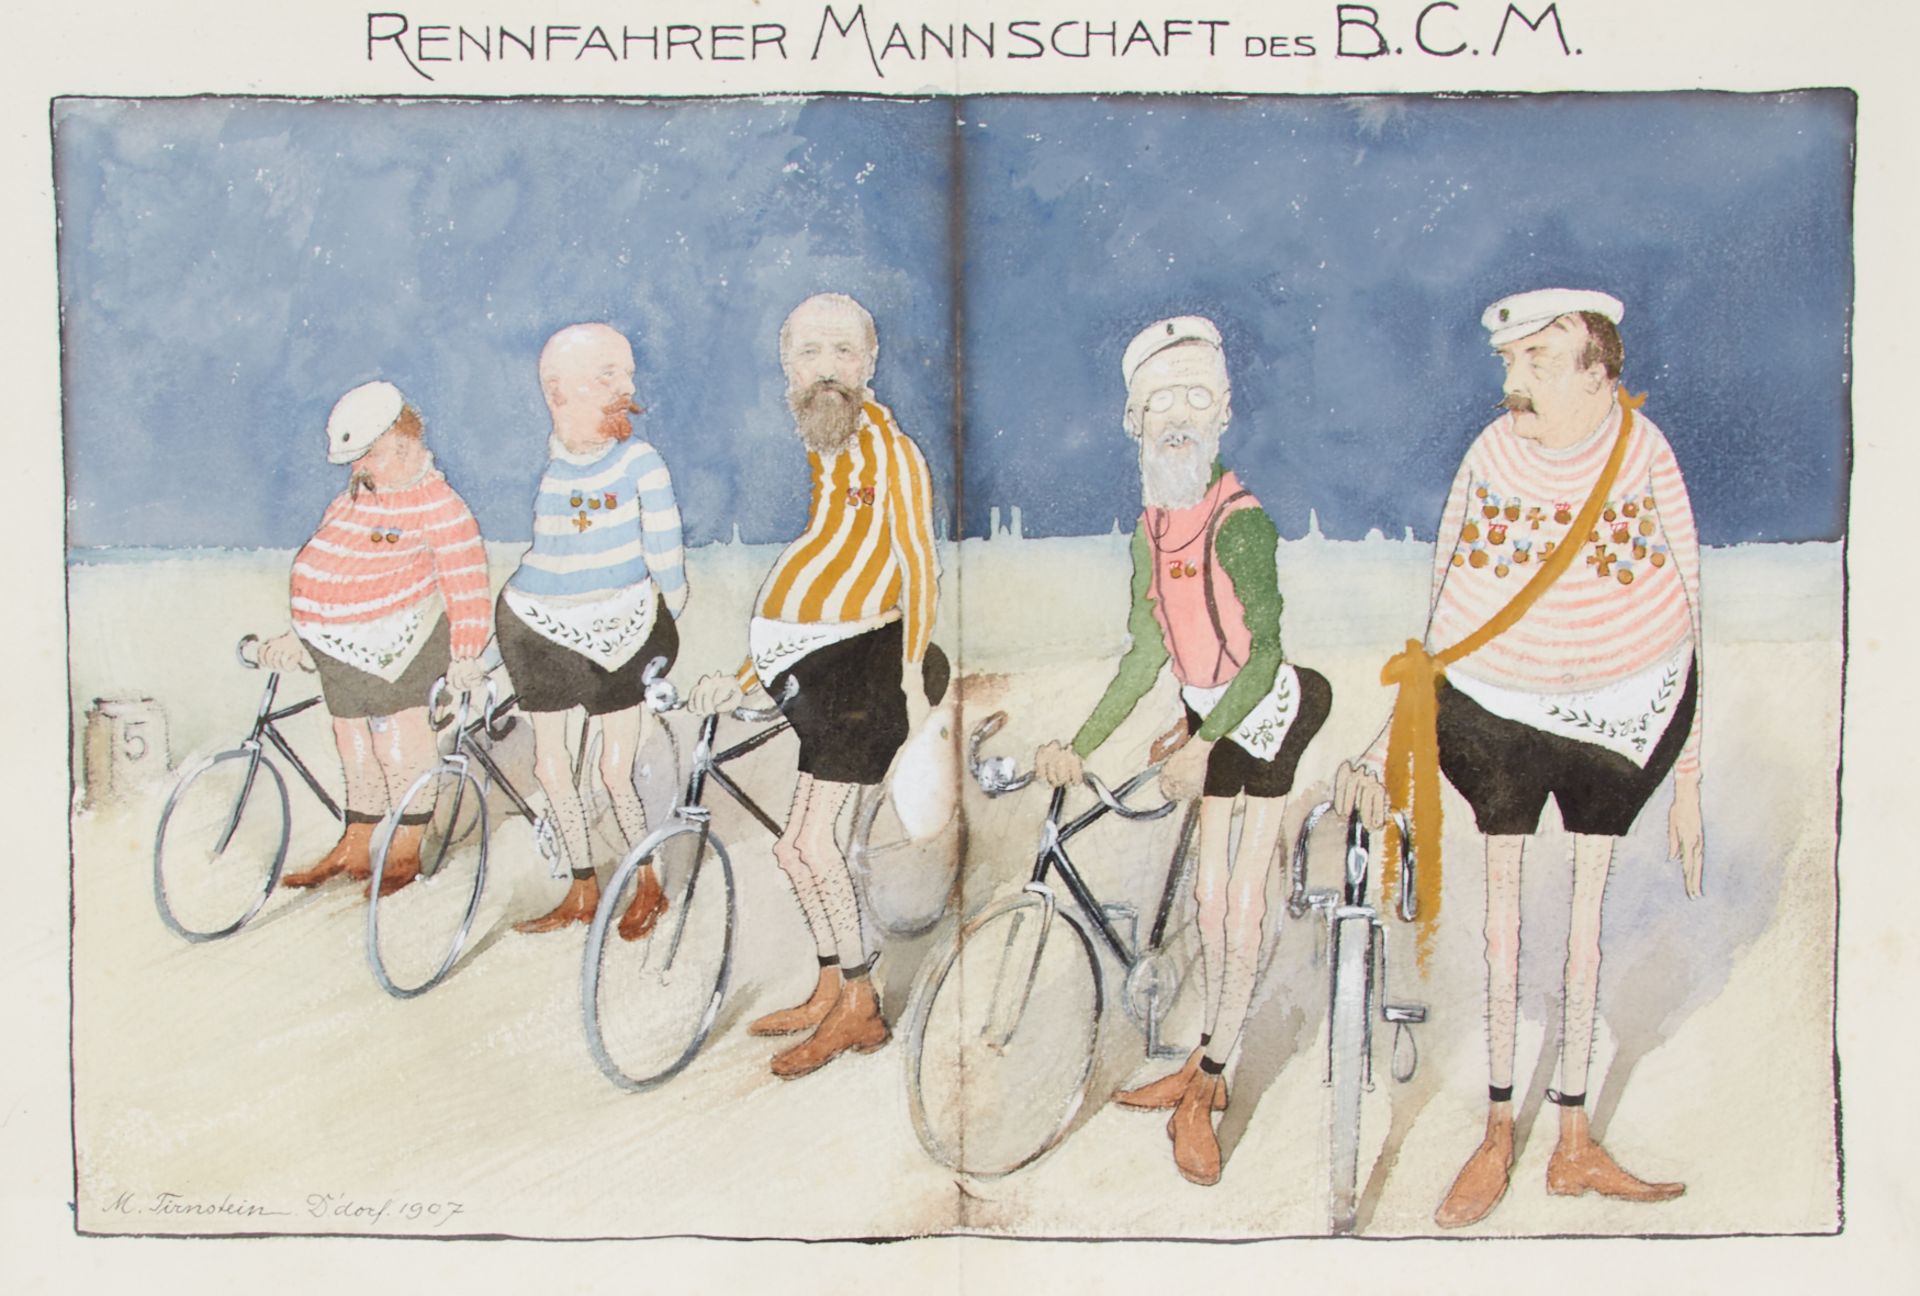 München - Bicycle Club München - Kneipzeitung - 16 Bde. - Image 40 of 40